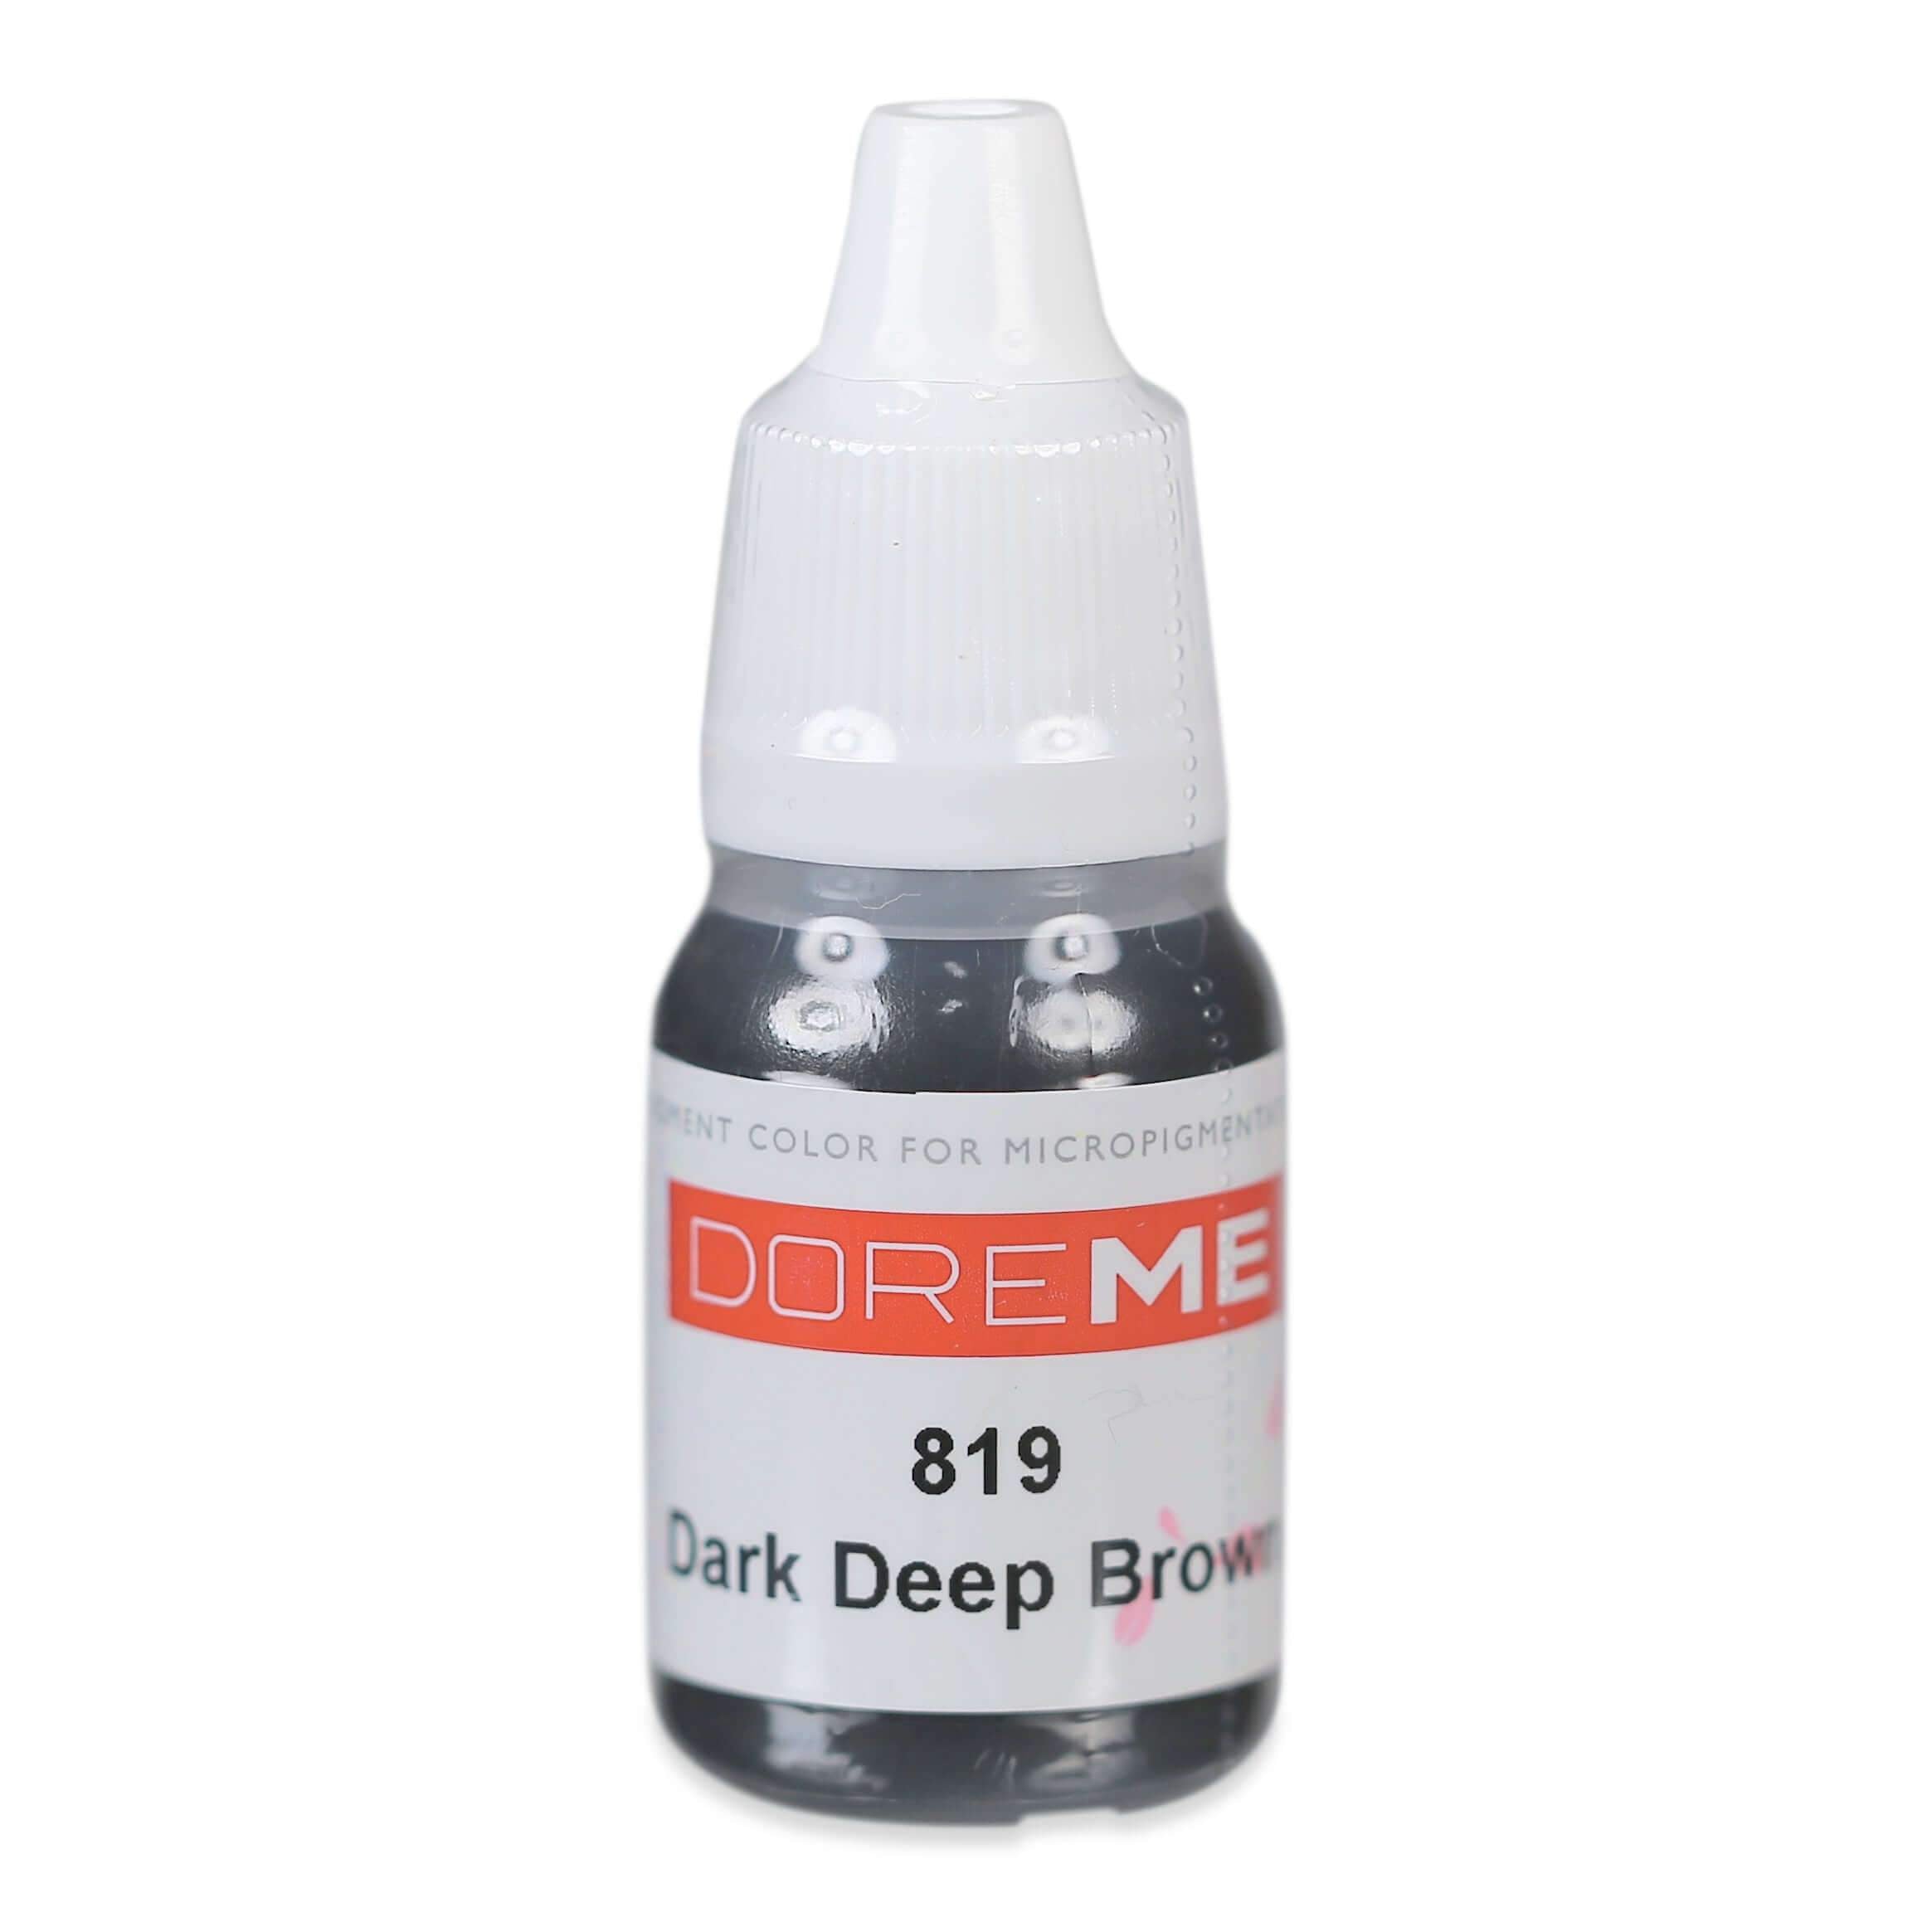 Doreme Organic Permanent Makeup Pigments UK Supplier Distributor Beautiful Ink Online Shop